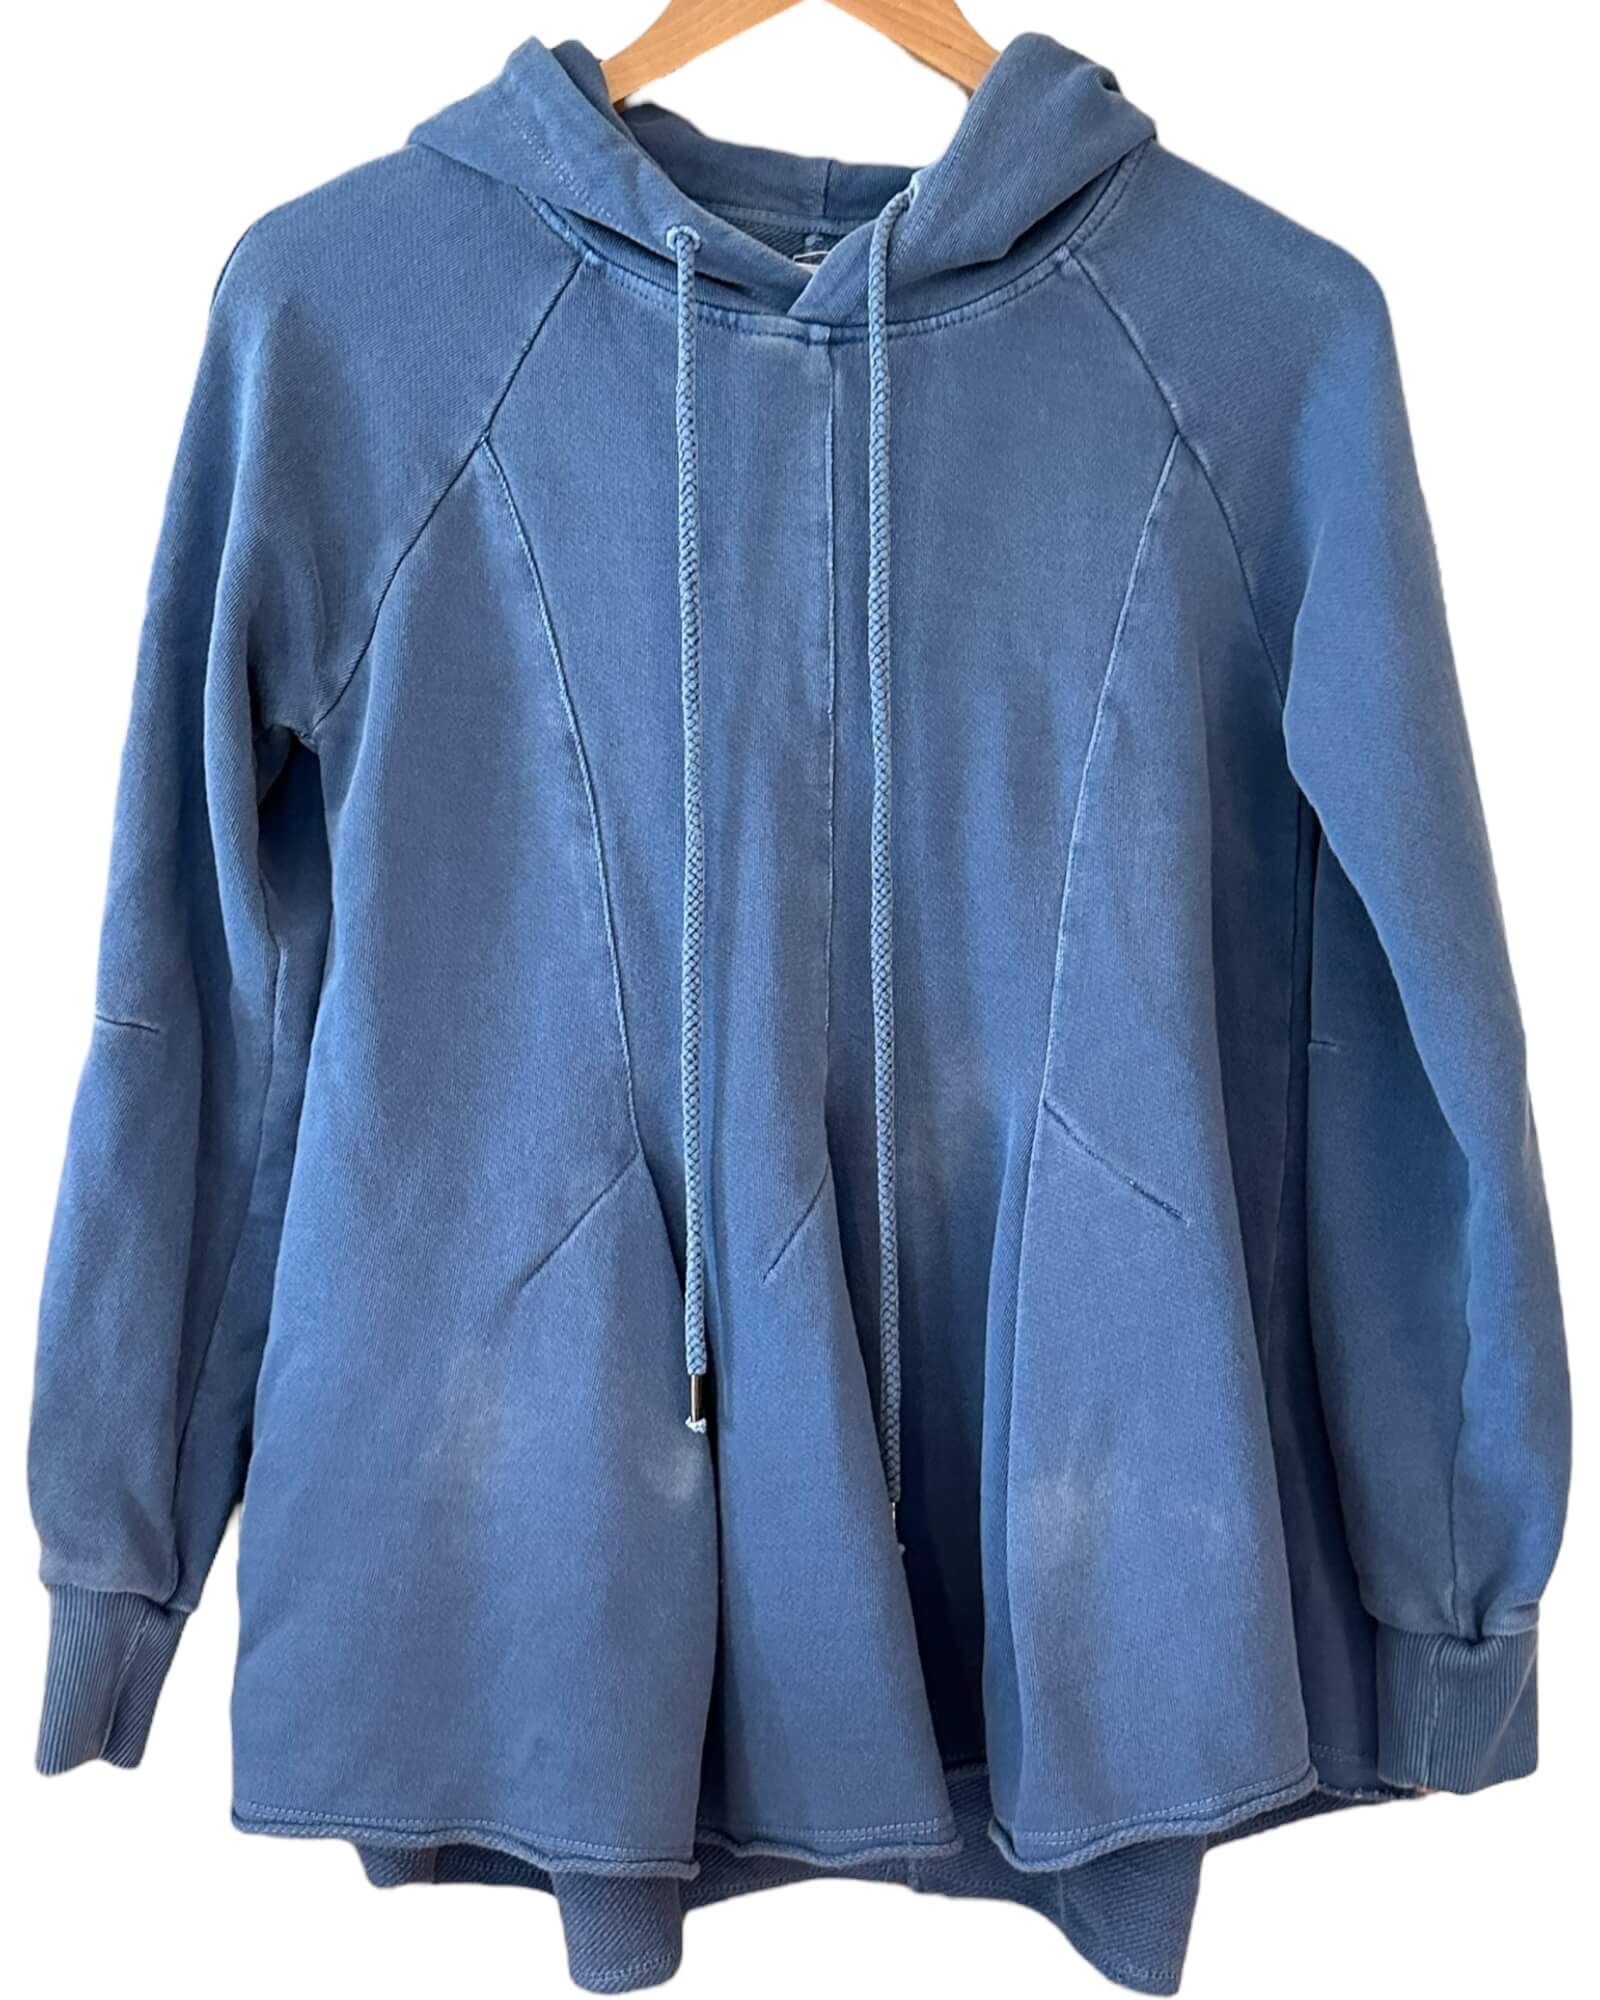 Soft Summer PILCRO AND THE LETTERPRESS ANTHROPOLOGIE Flynn cornflower blue hooded swing sweatshirt